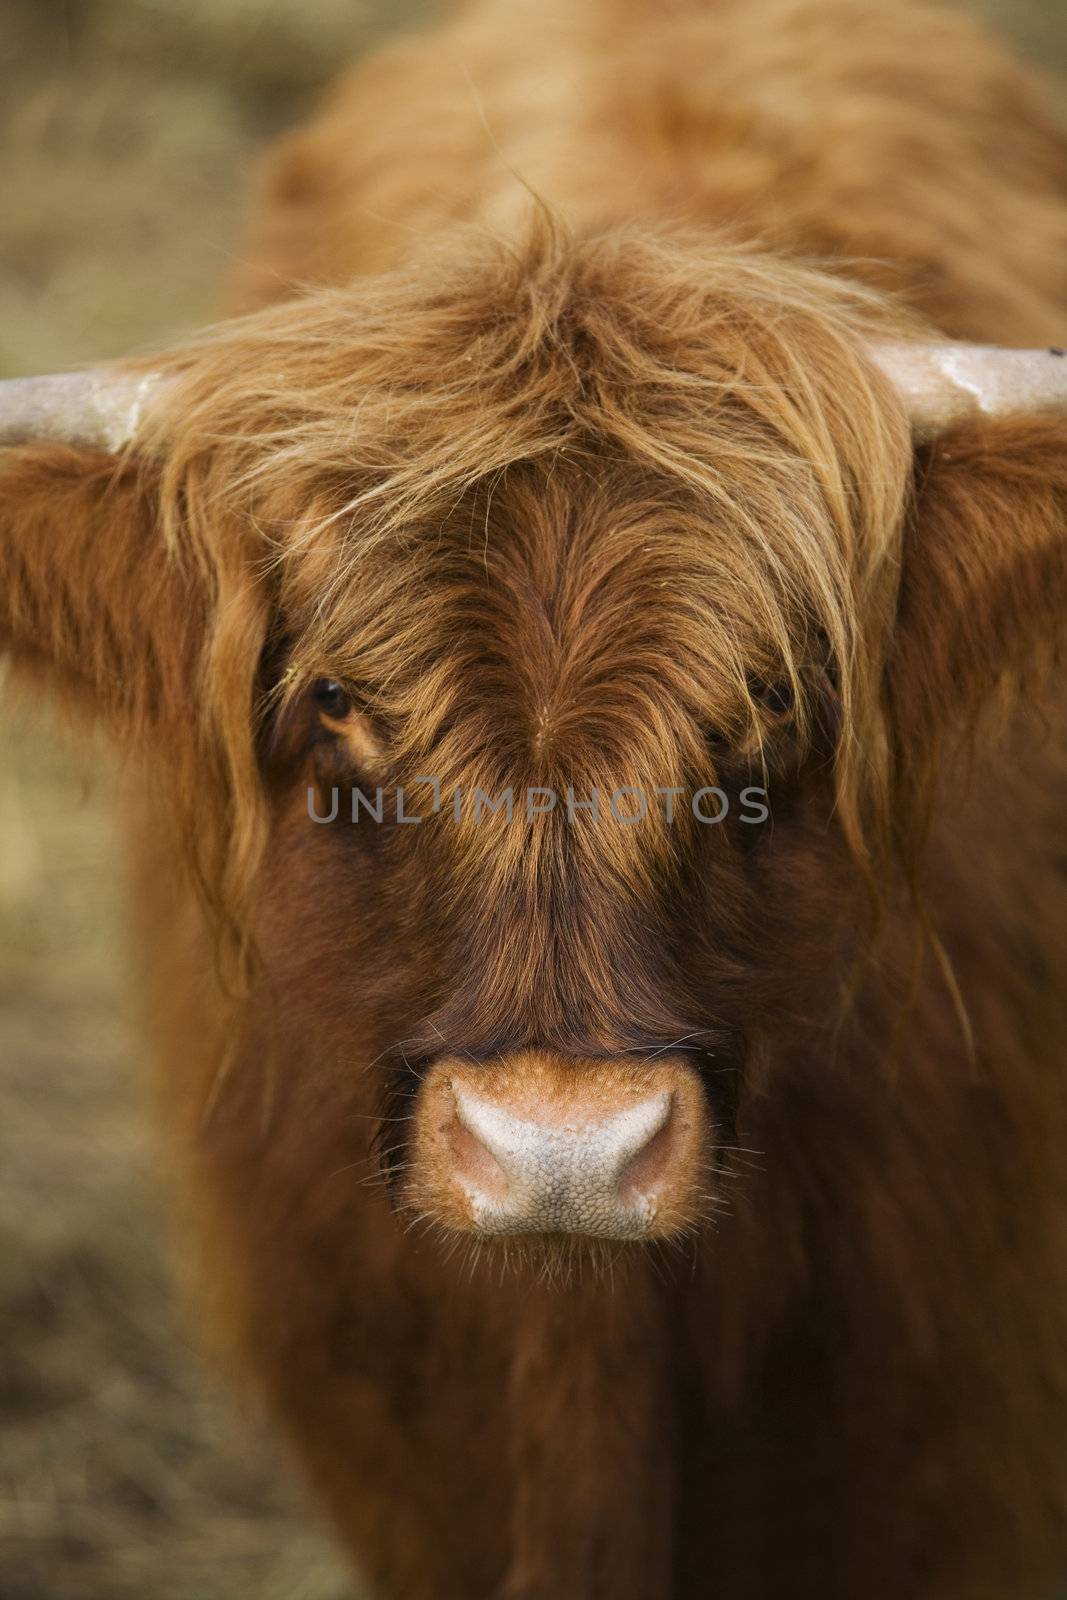 Cow close-up by gemenacom